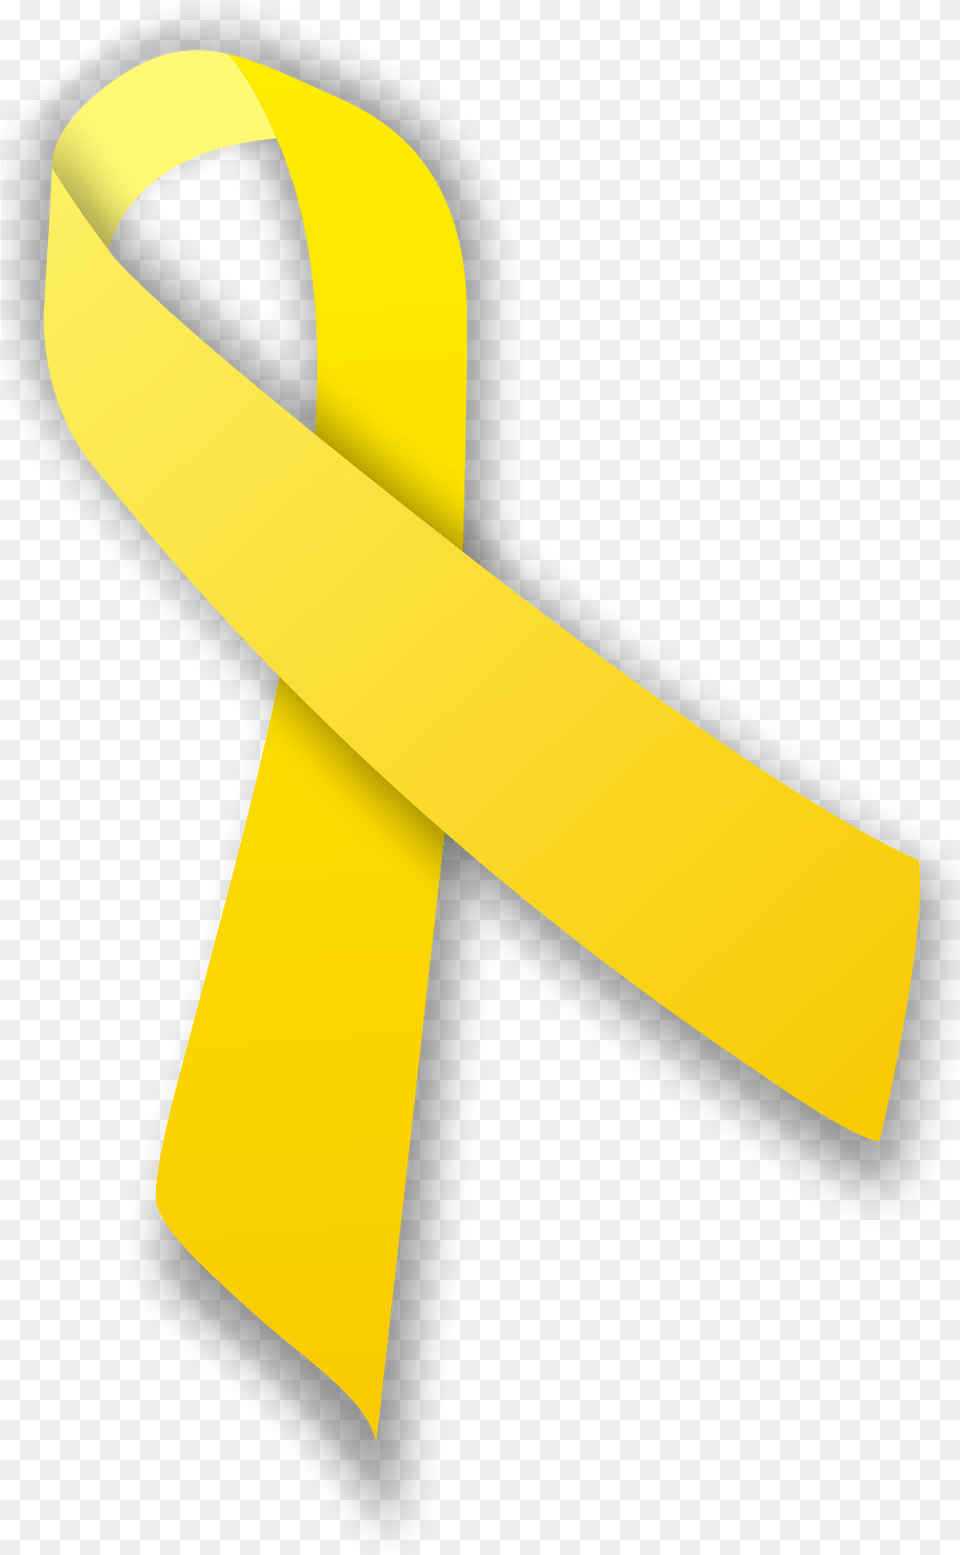 2014 Hong Kong Class Boycott Campaign Wikipedia Yellow Spina Bifida Ribbon, Accessories, Formal Wear, Tie, Rocket Free Png Download